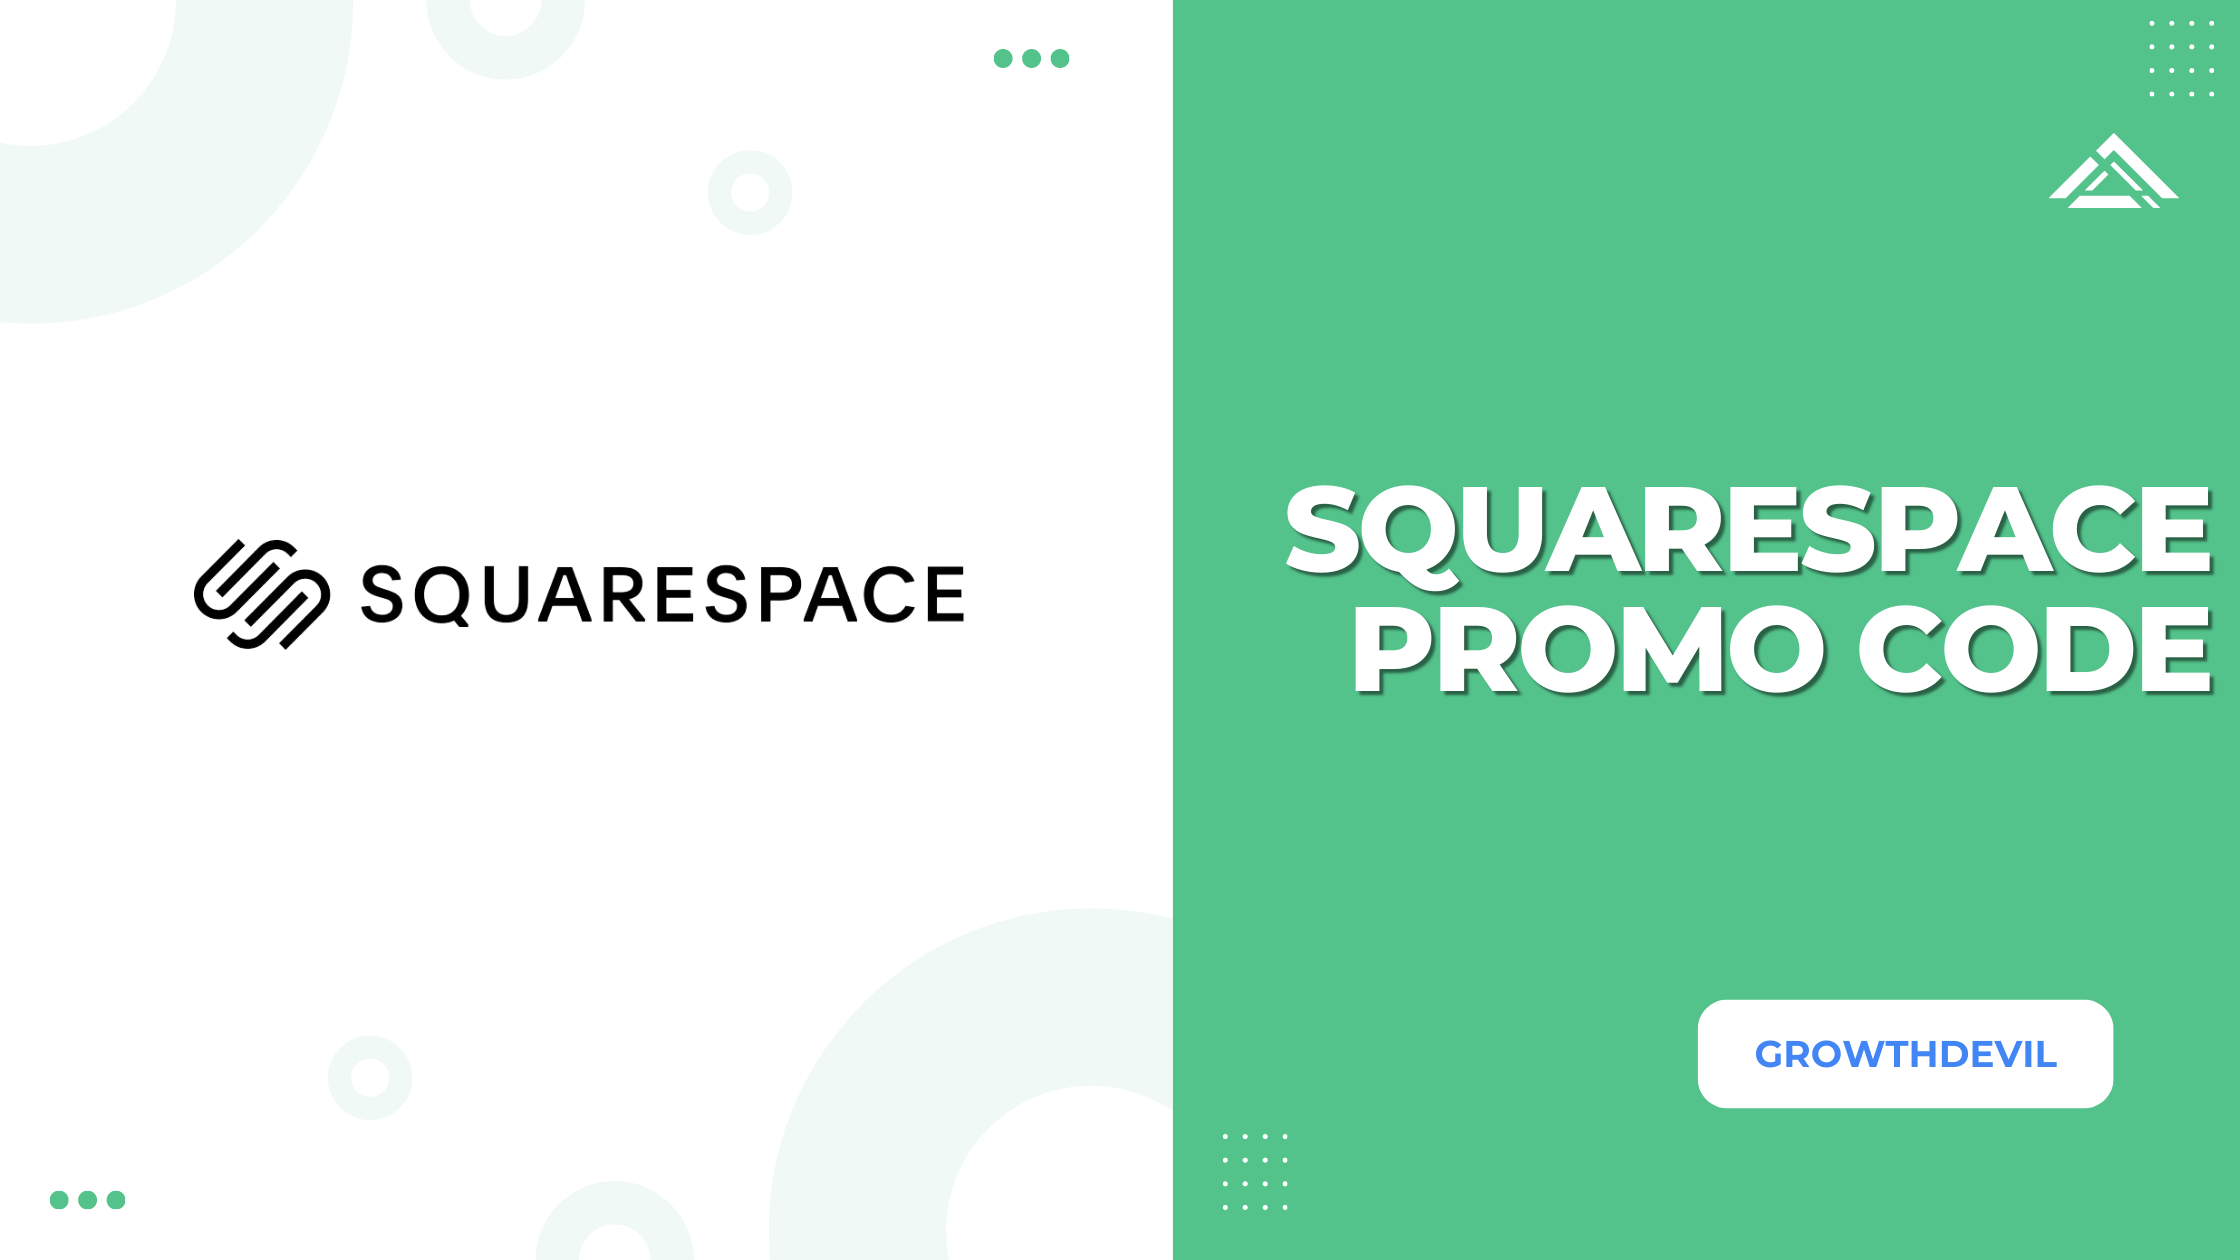 Squarespace Promo Code - GrowthDevil